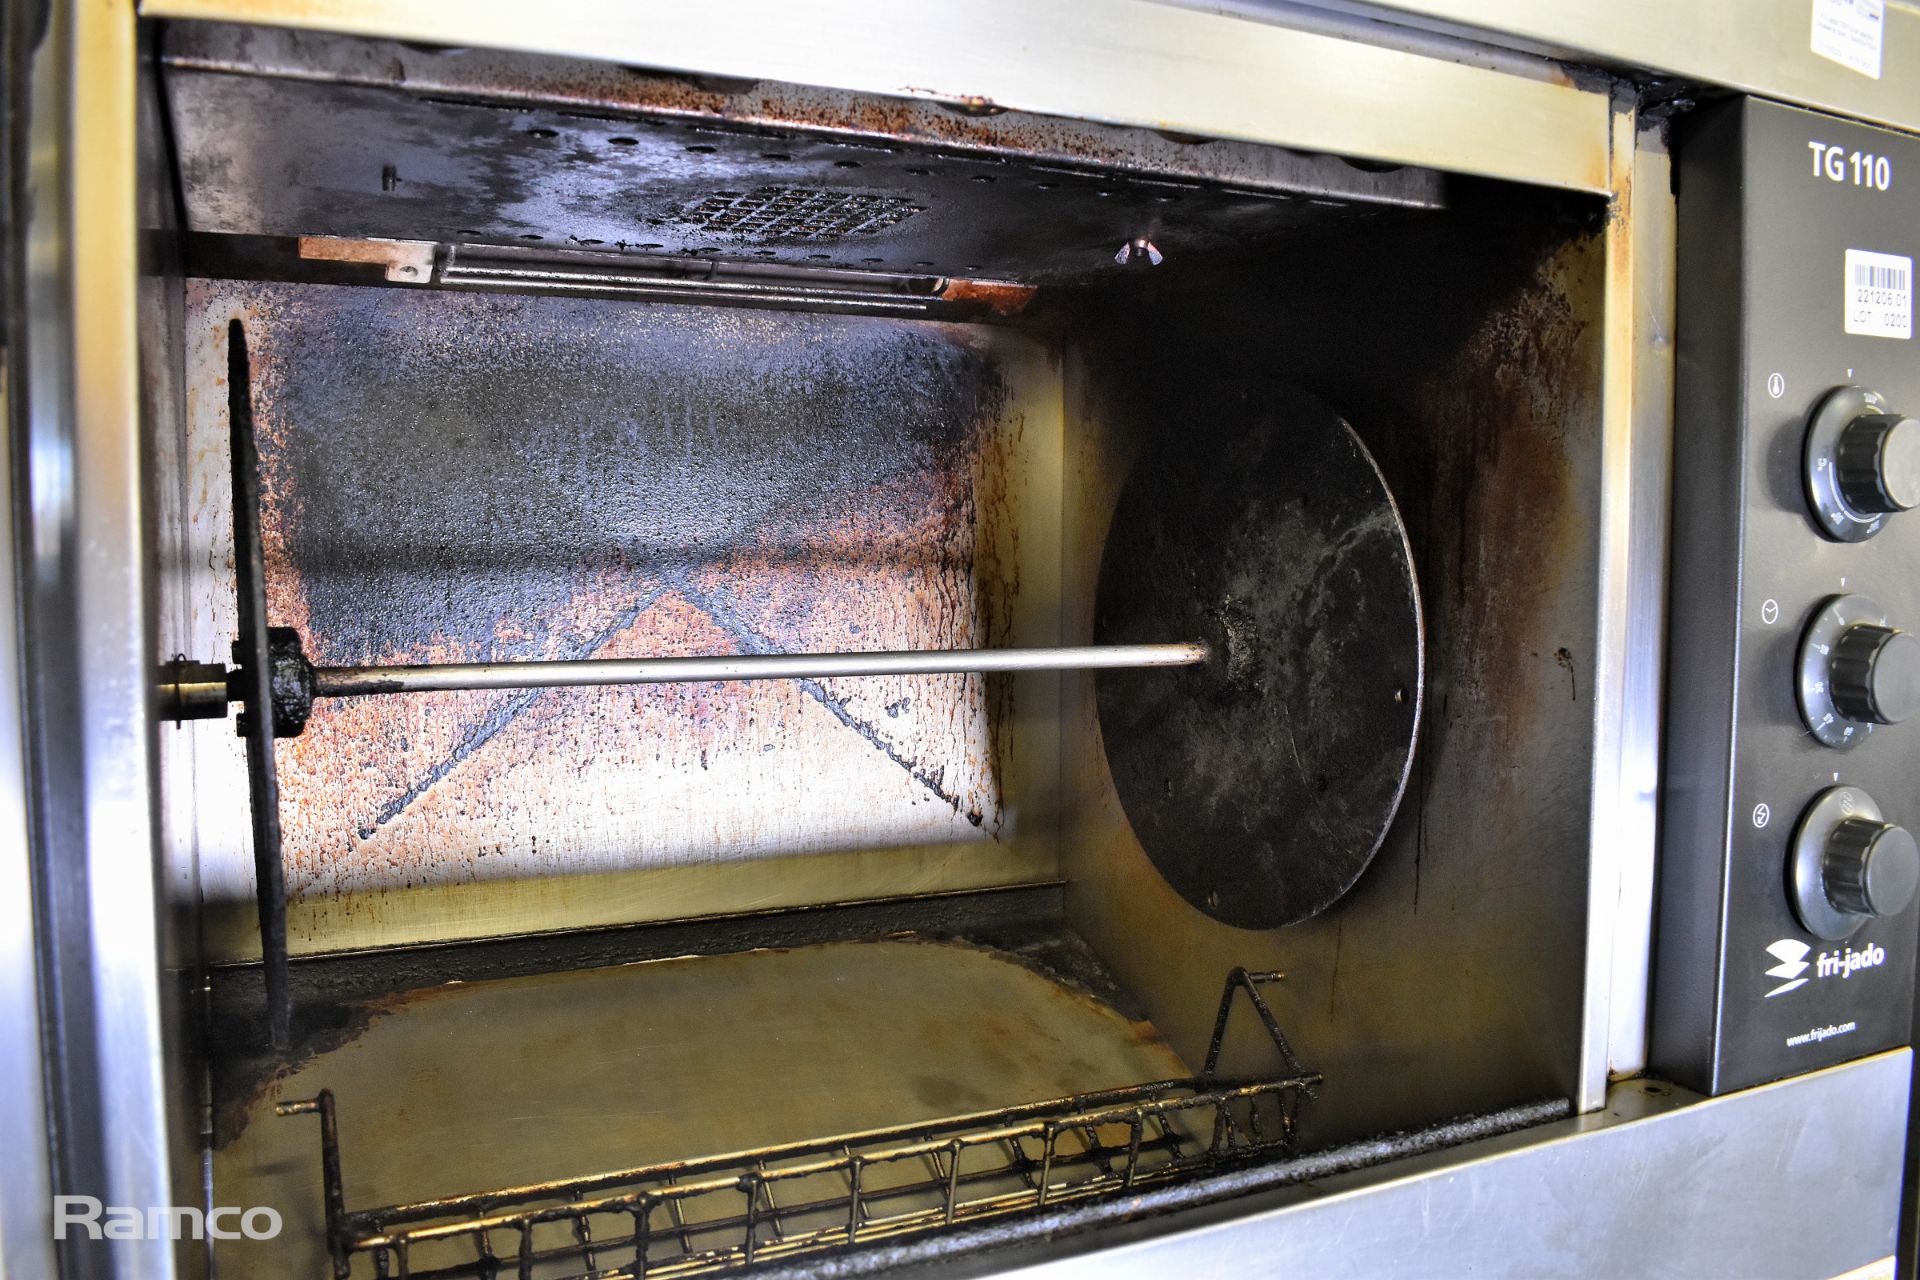 2x Fri-Jado TG110-M electric rotisserie ovens - 84 x 55 x 75cm, Stainless steel trolley - Image 3 of 6